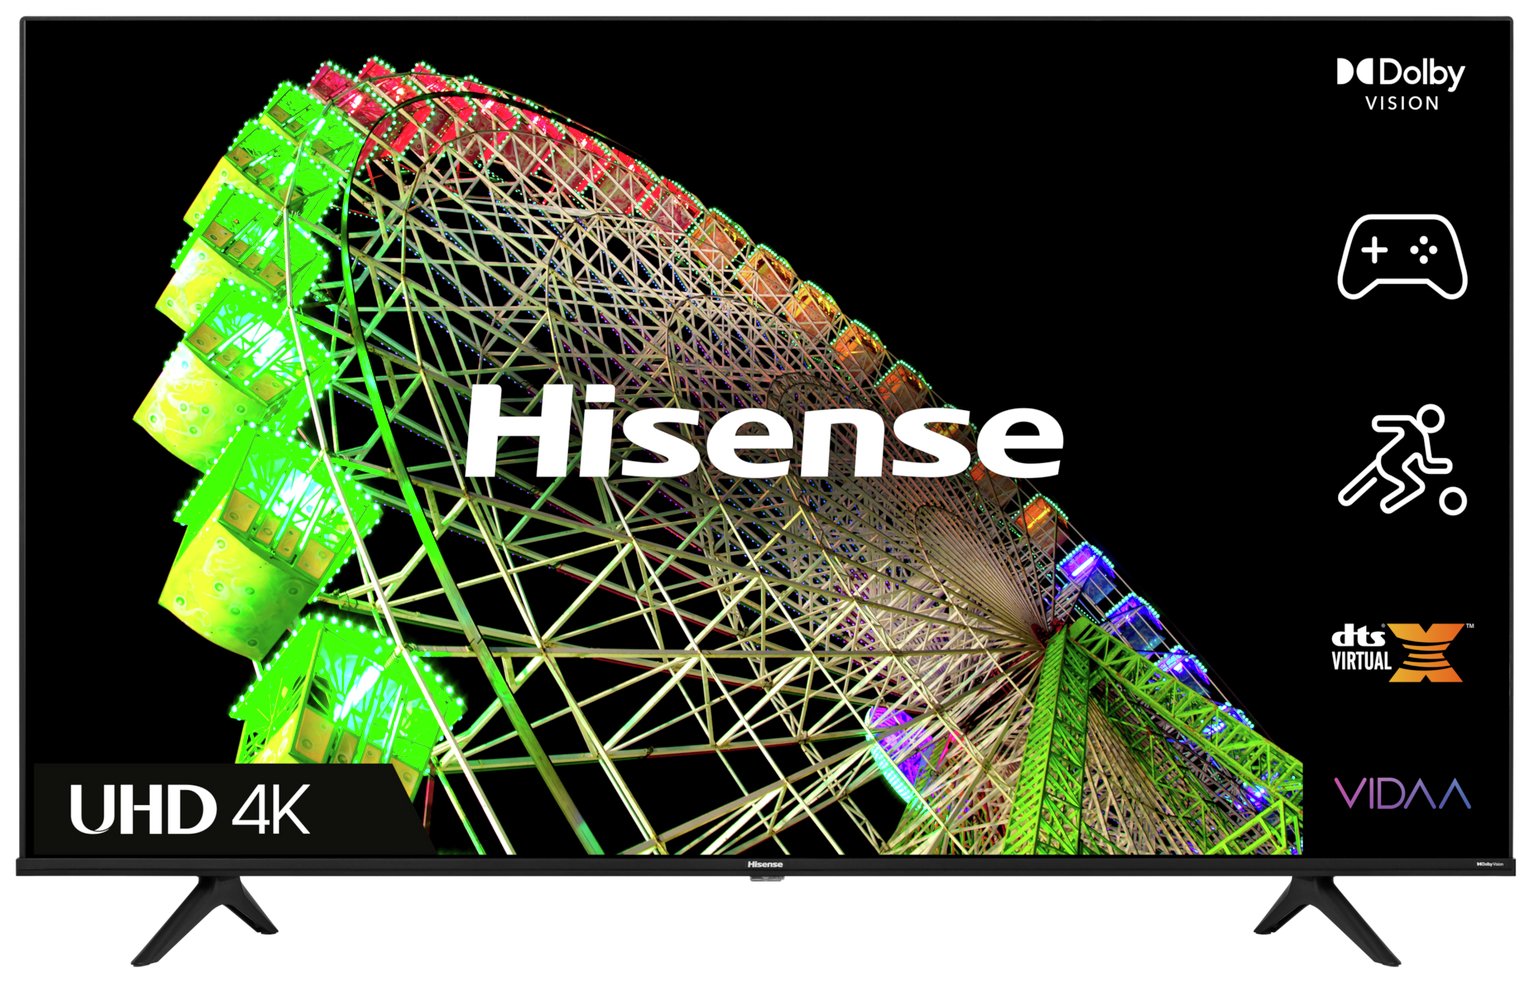 Hisense 43 Inch 43A6BGTUK Smart 4K UHD HDR LED Freeview TV